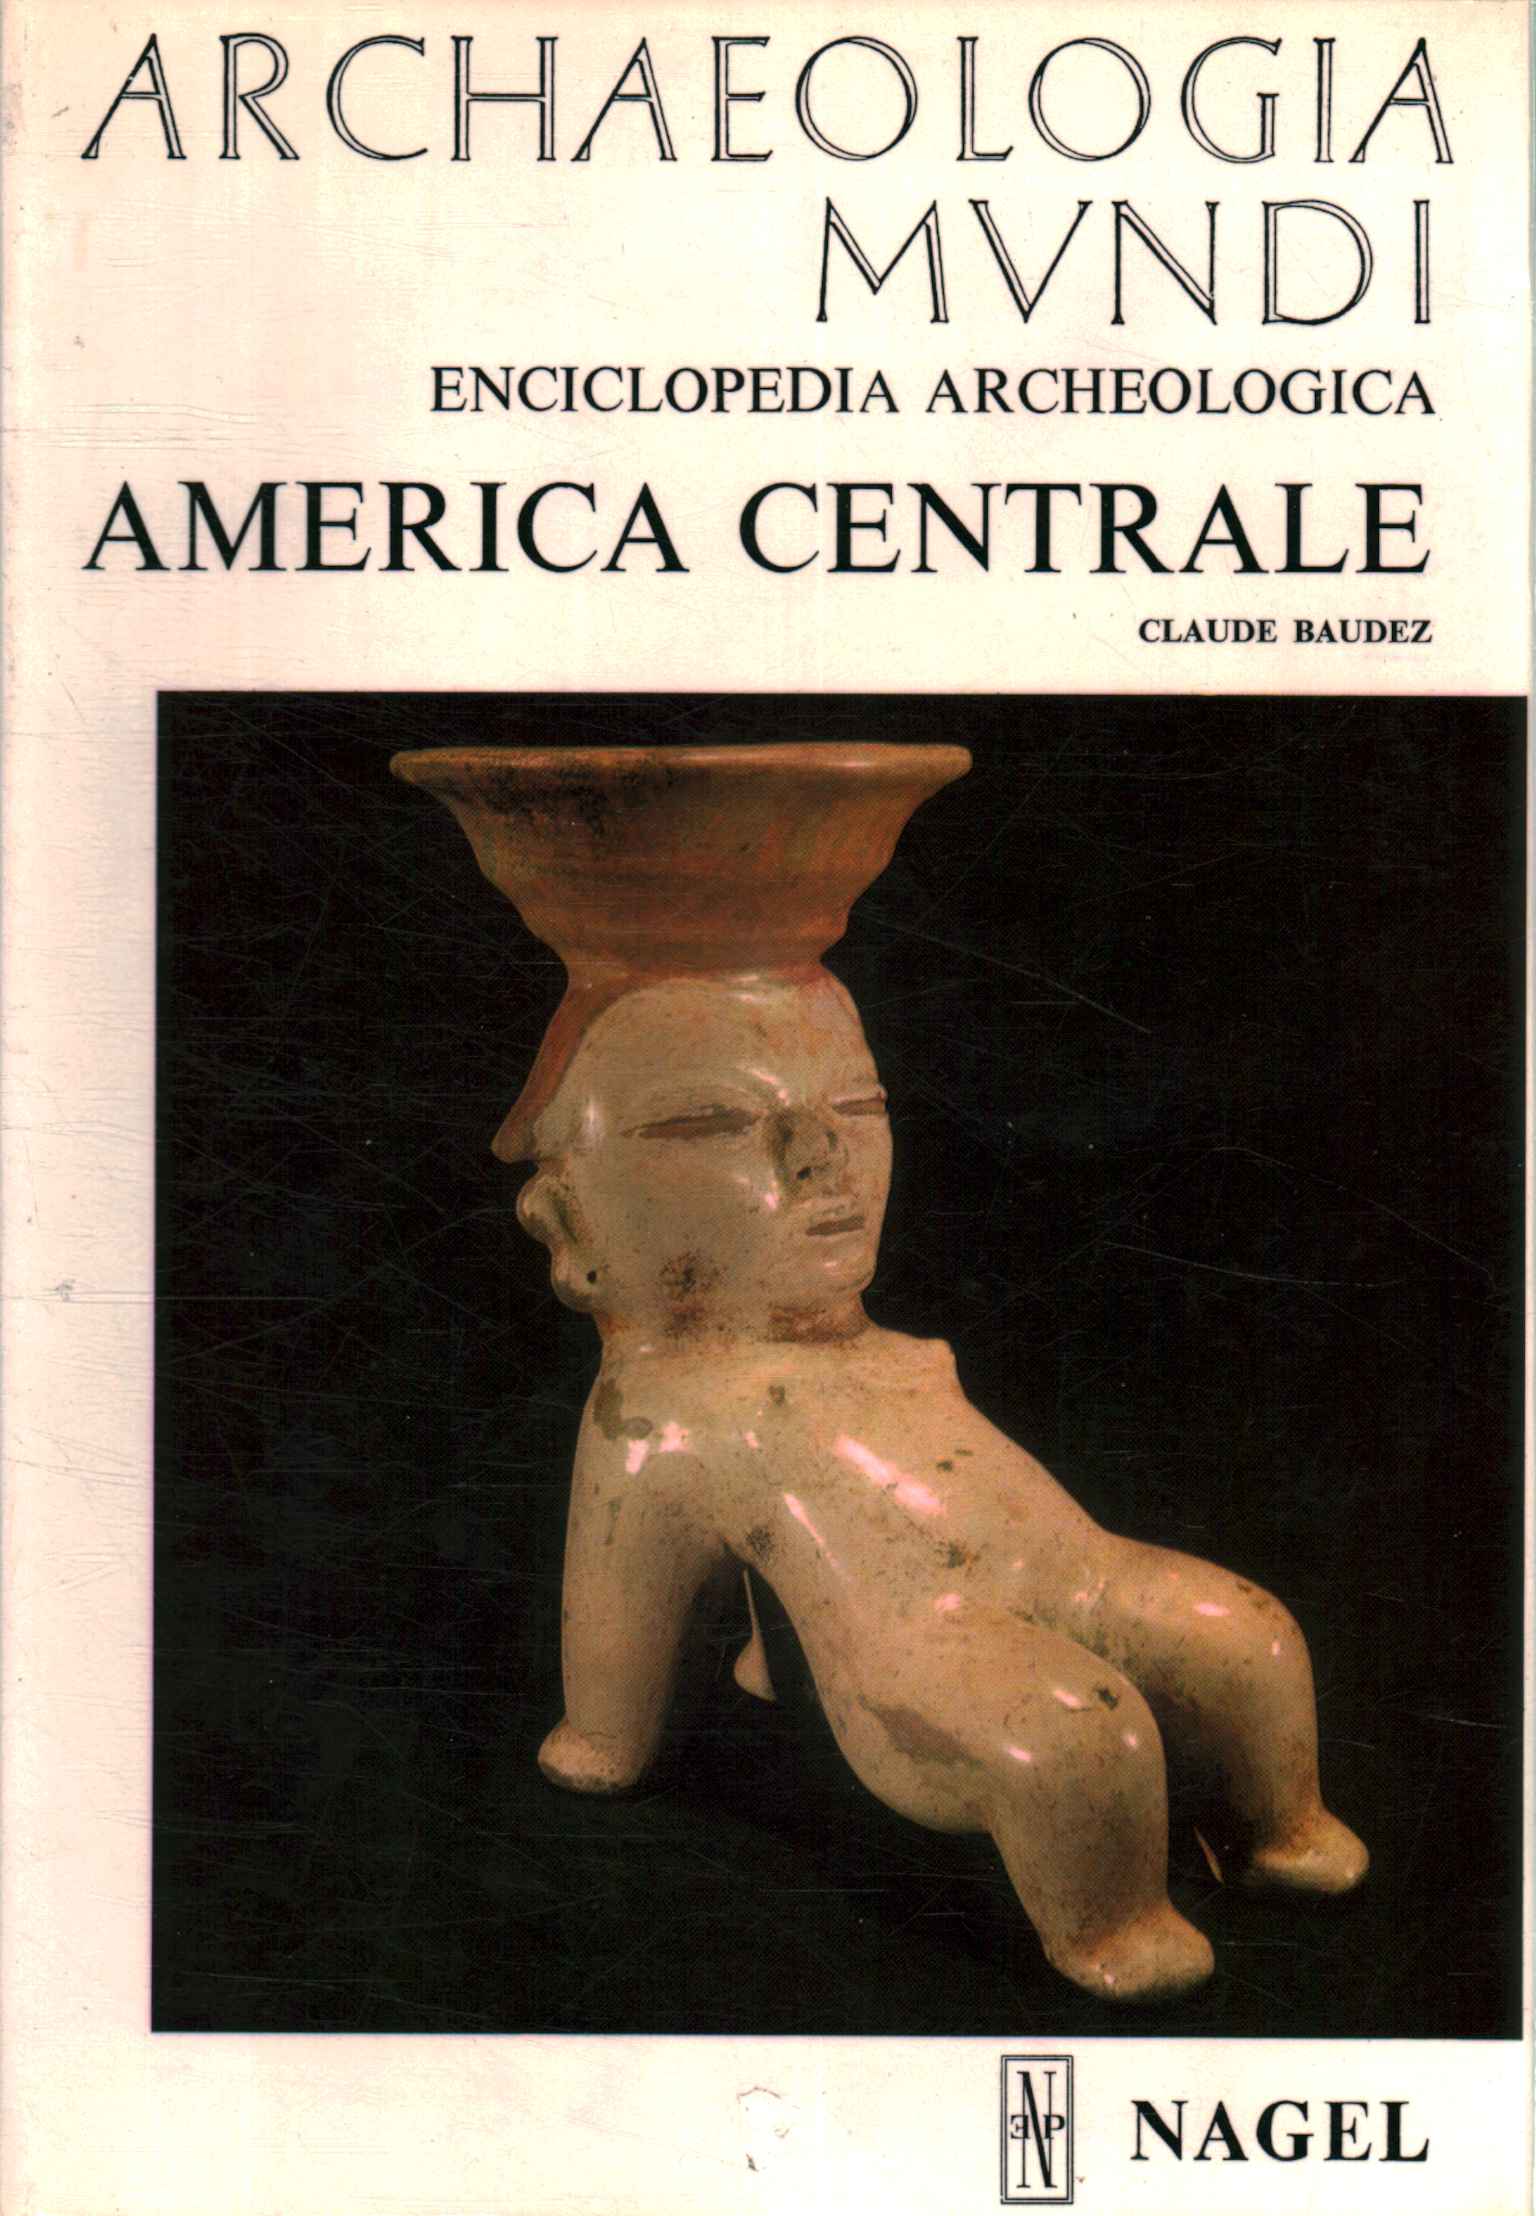 Archaeological encyclopedia. Central America